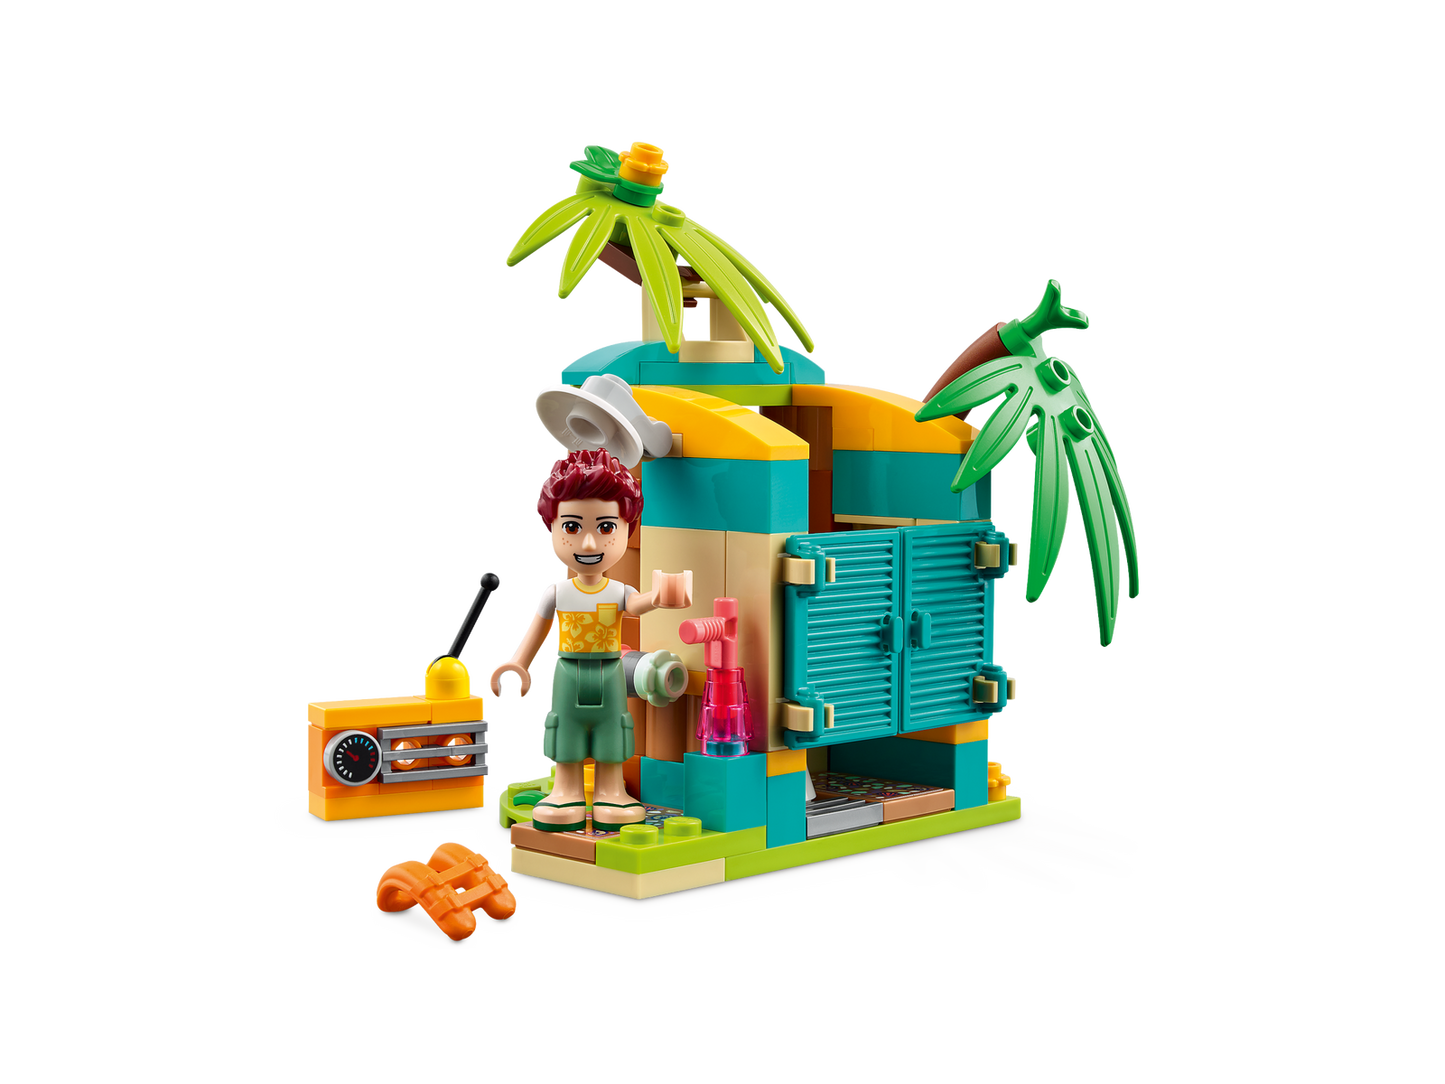 LEGO Friends Beach Glamping 41700